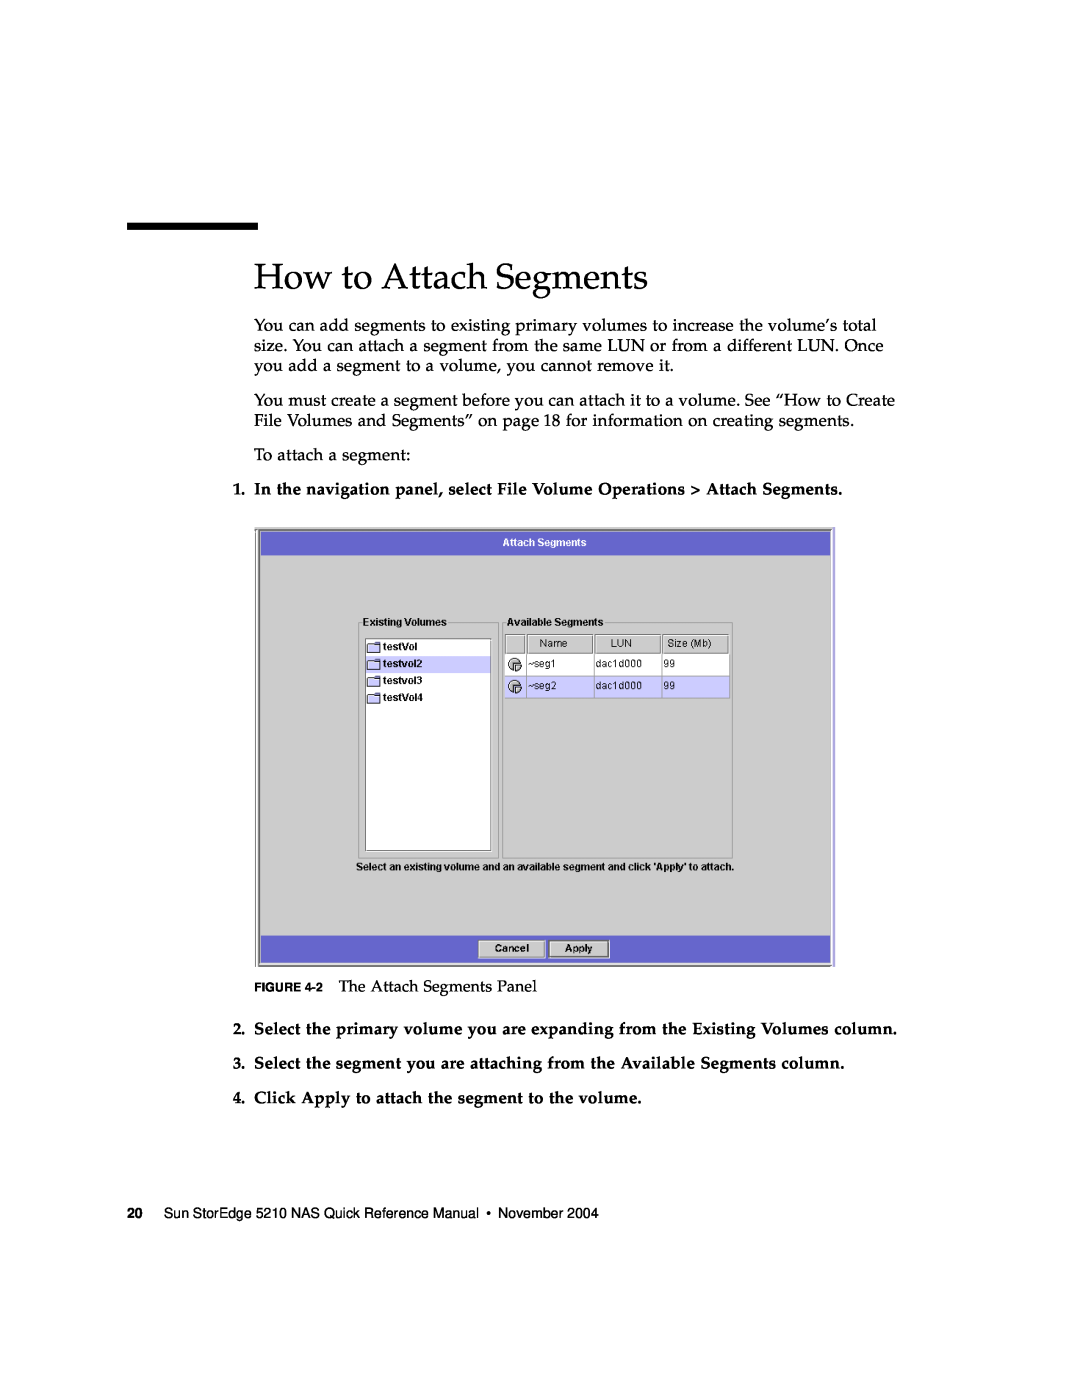 Sun Microsystems 5210 NAS manual How to Attach Segments 